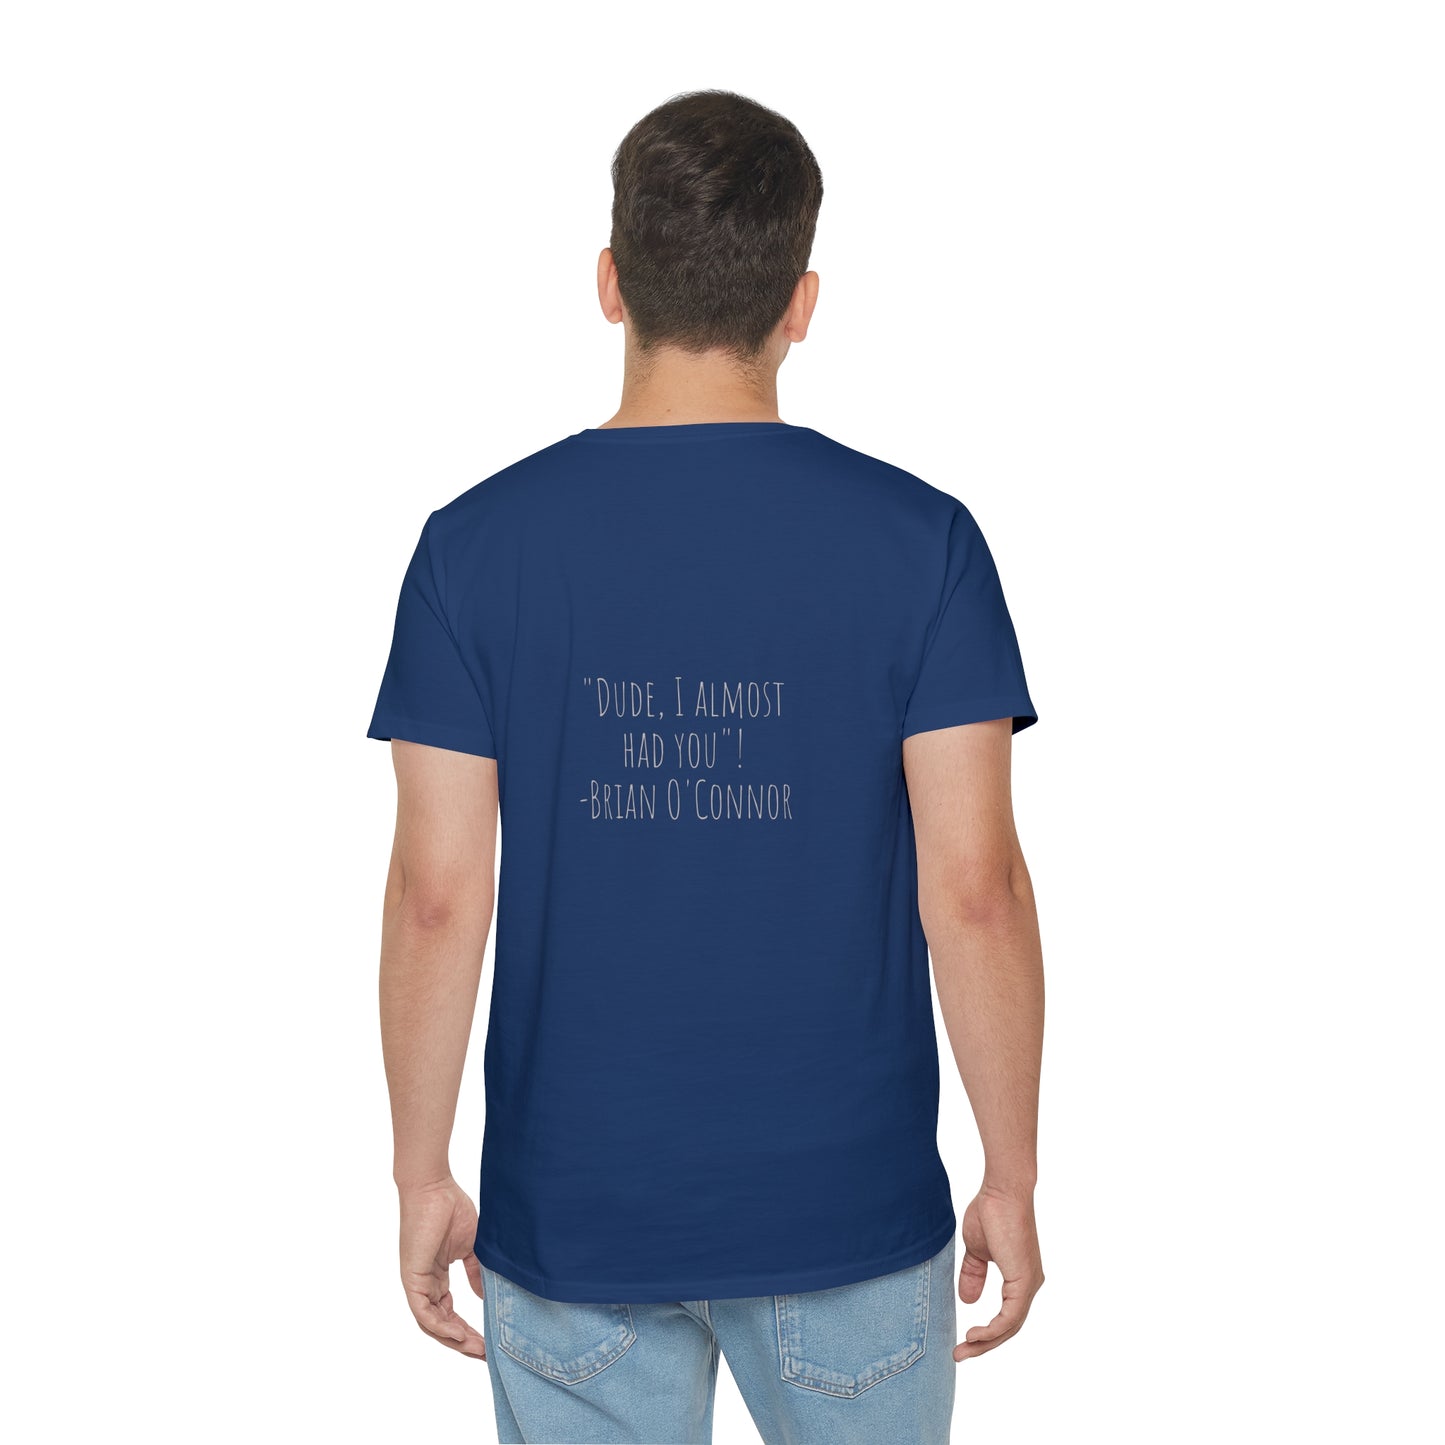 T-Shirt Fruit of the Loom, Paul Walker Tribute